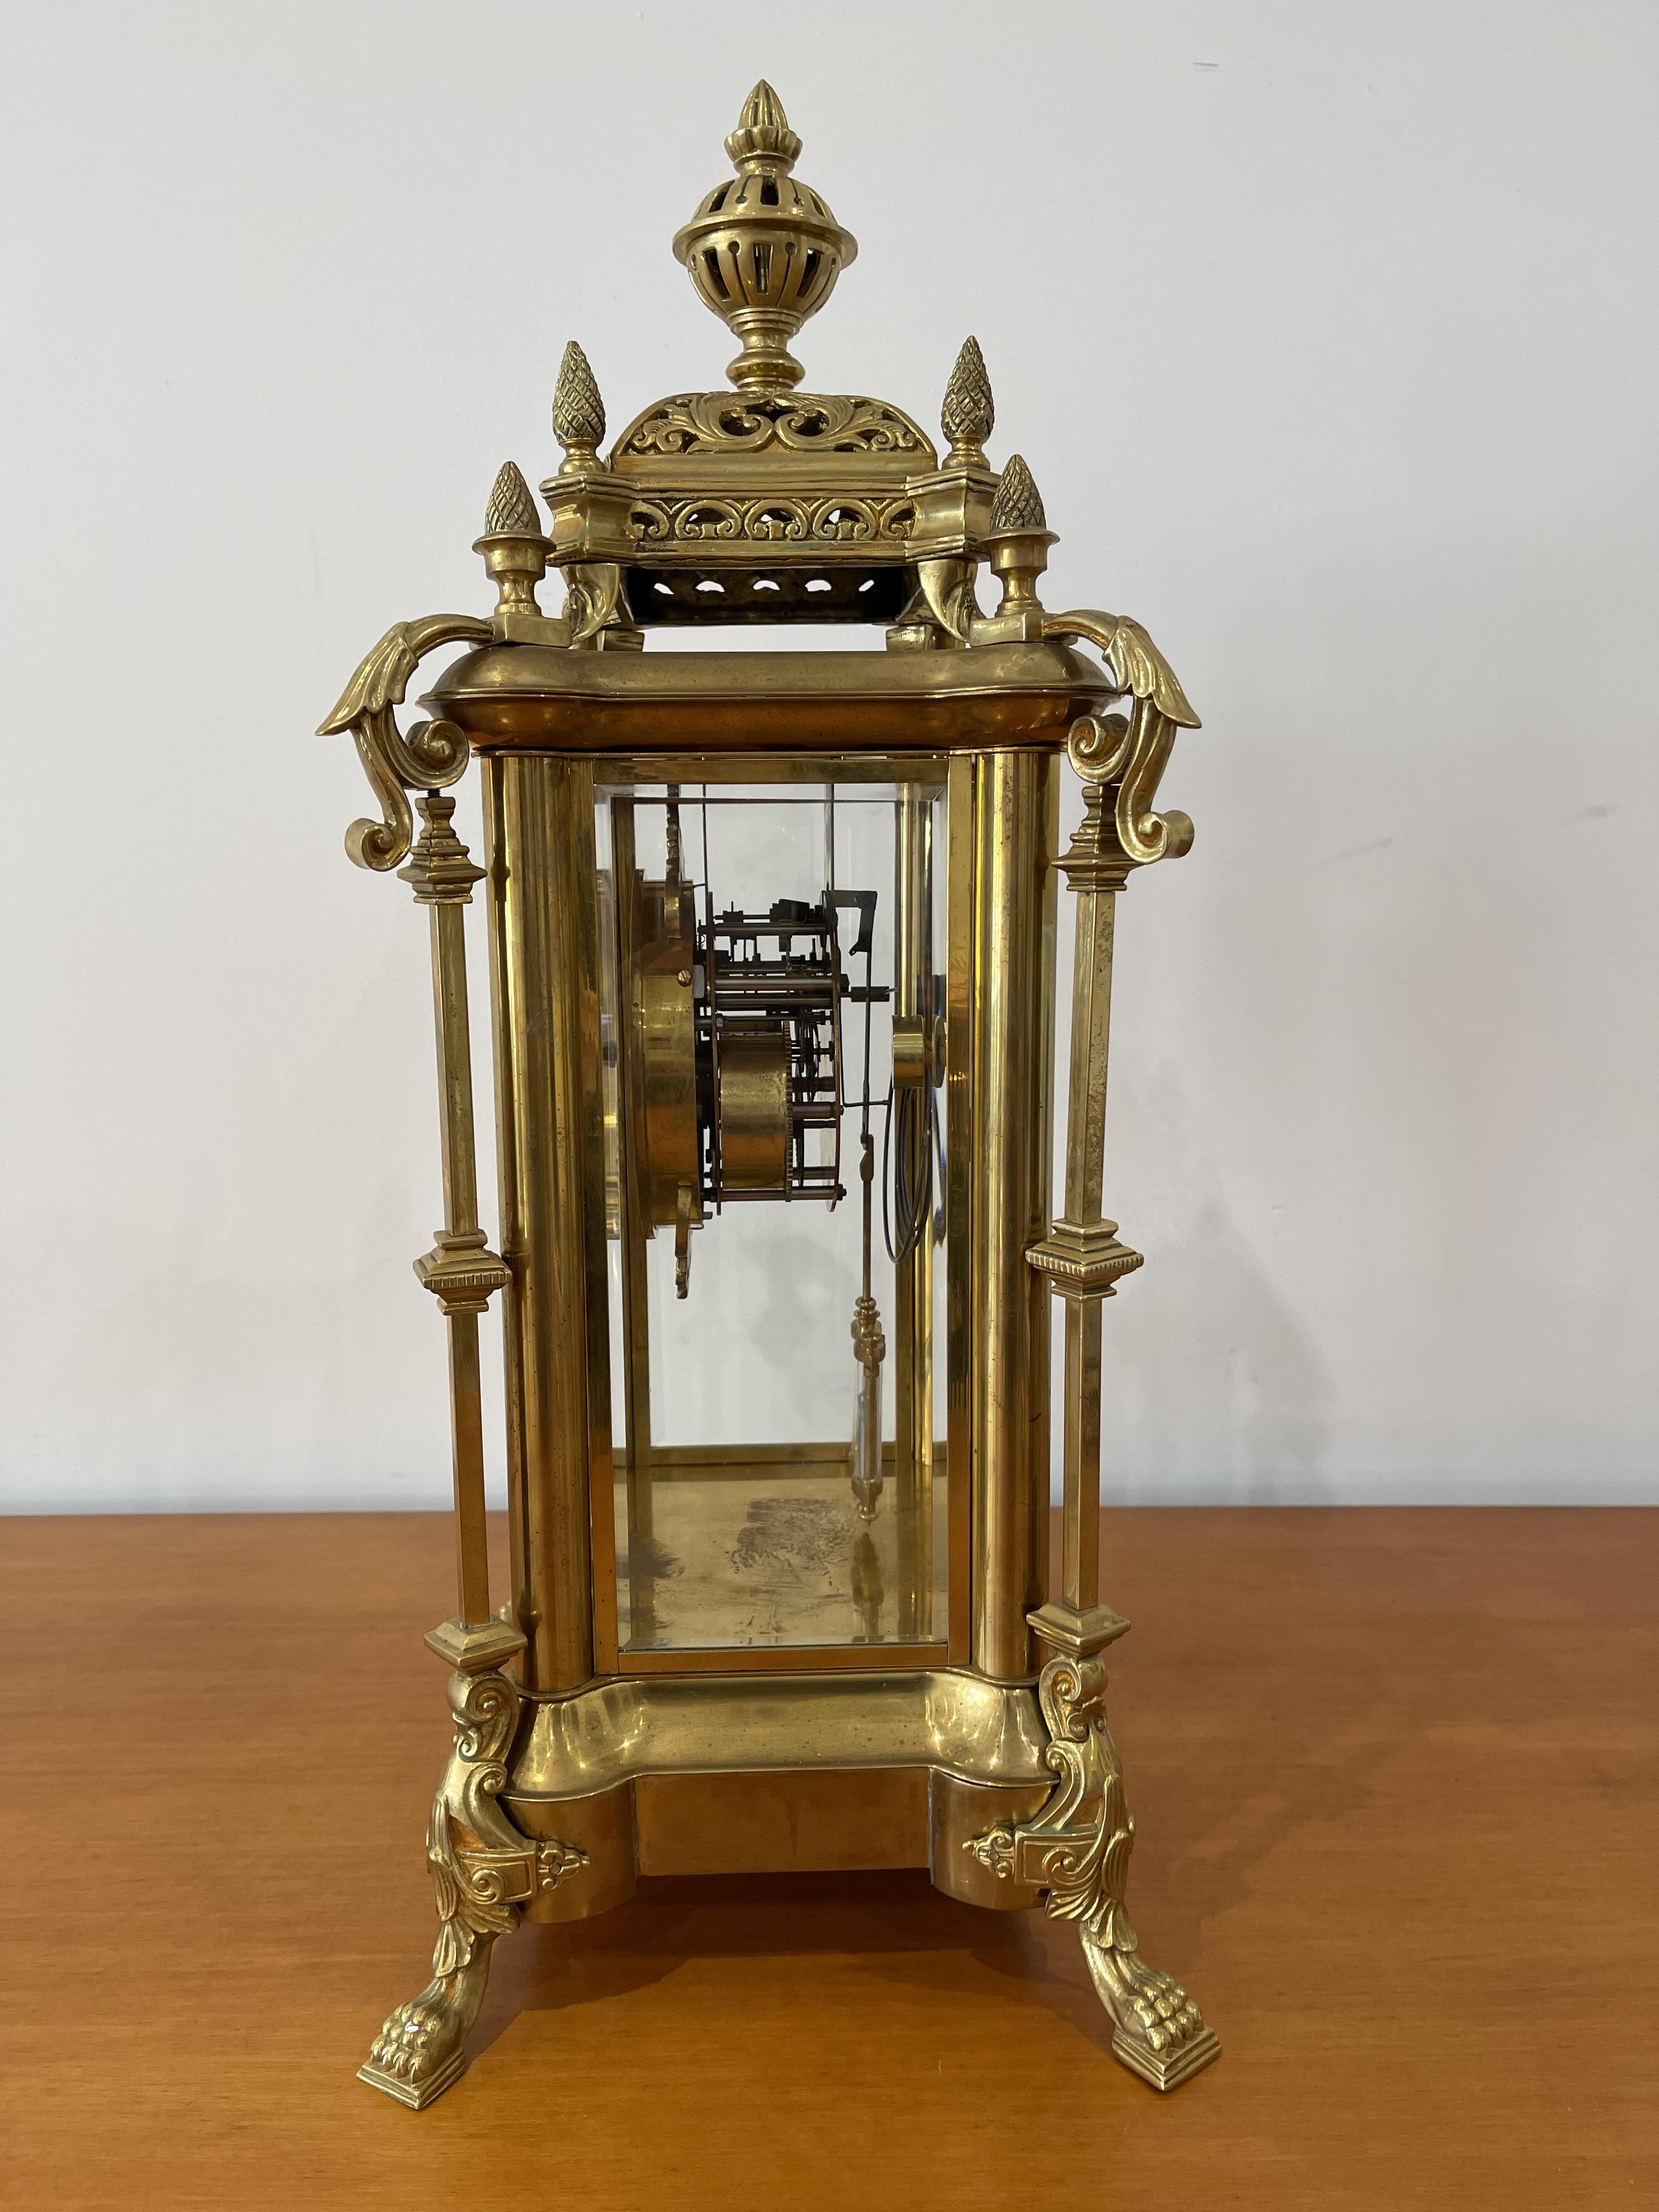 Stunning 8 Day Striking Brass Four Glass Ansonia Mantel Clock - Image 5 of 21